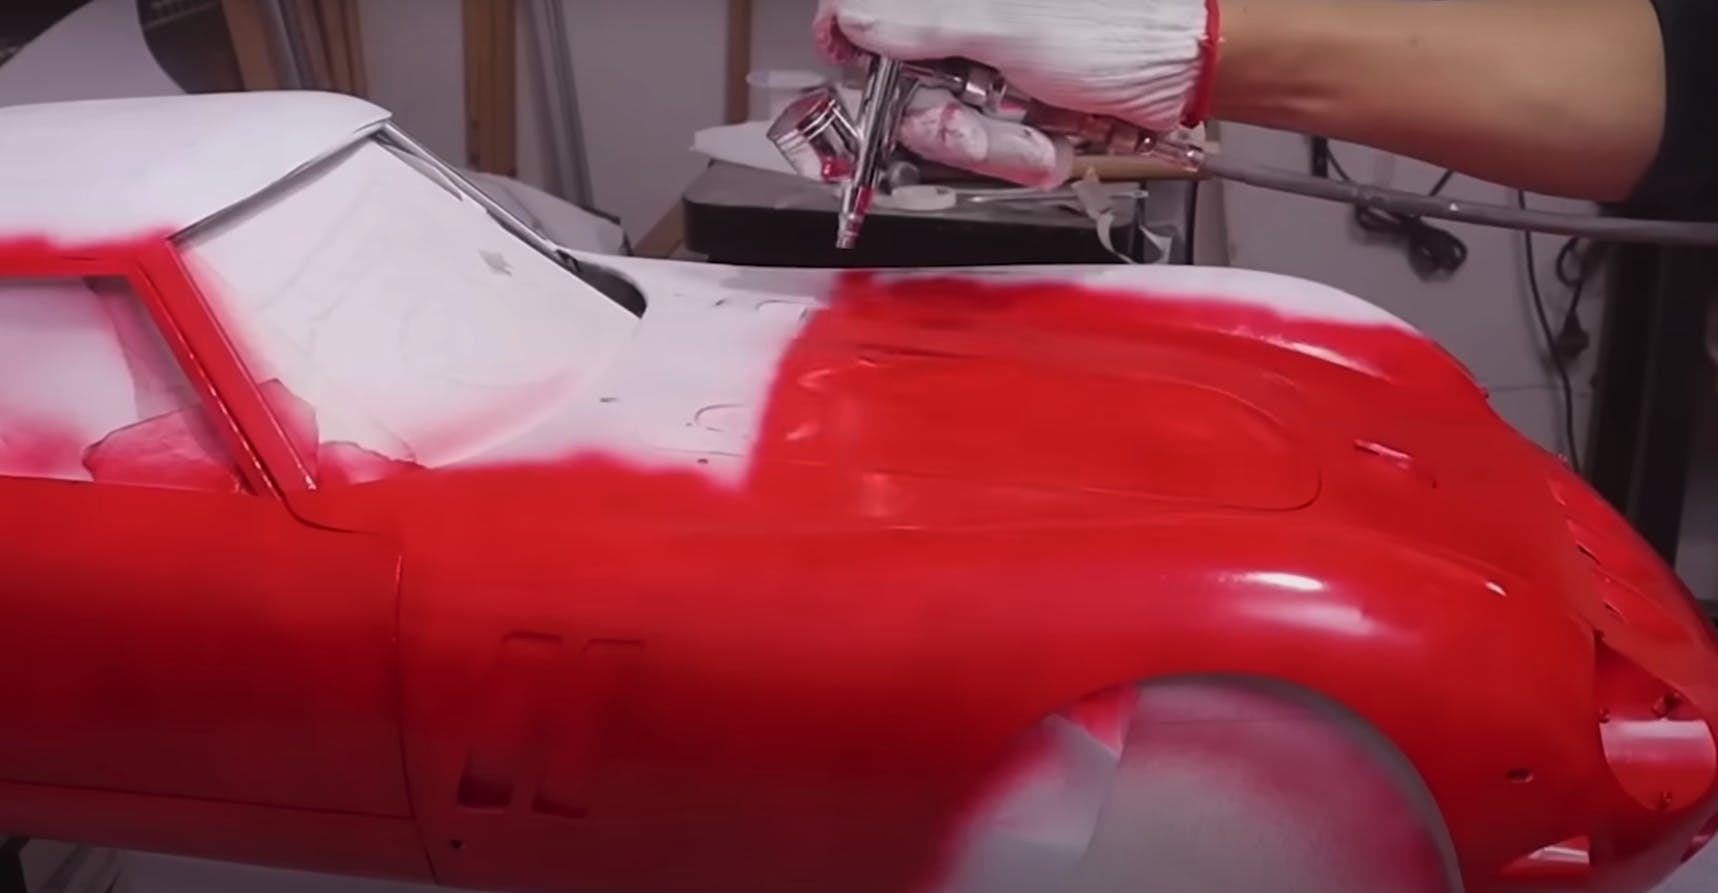 Scale Ferrari 250 GTO RC car red paint application